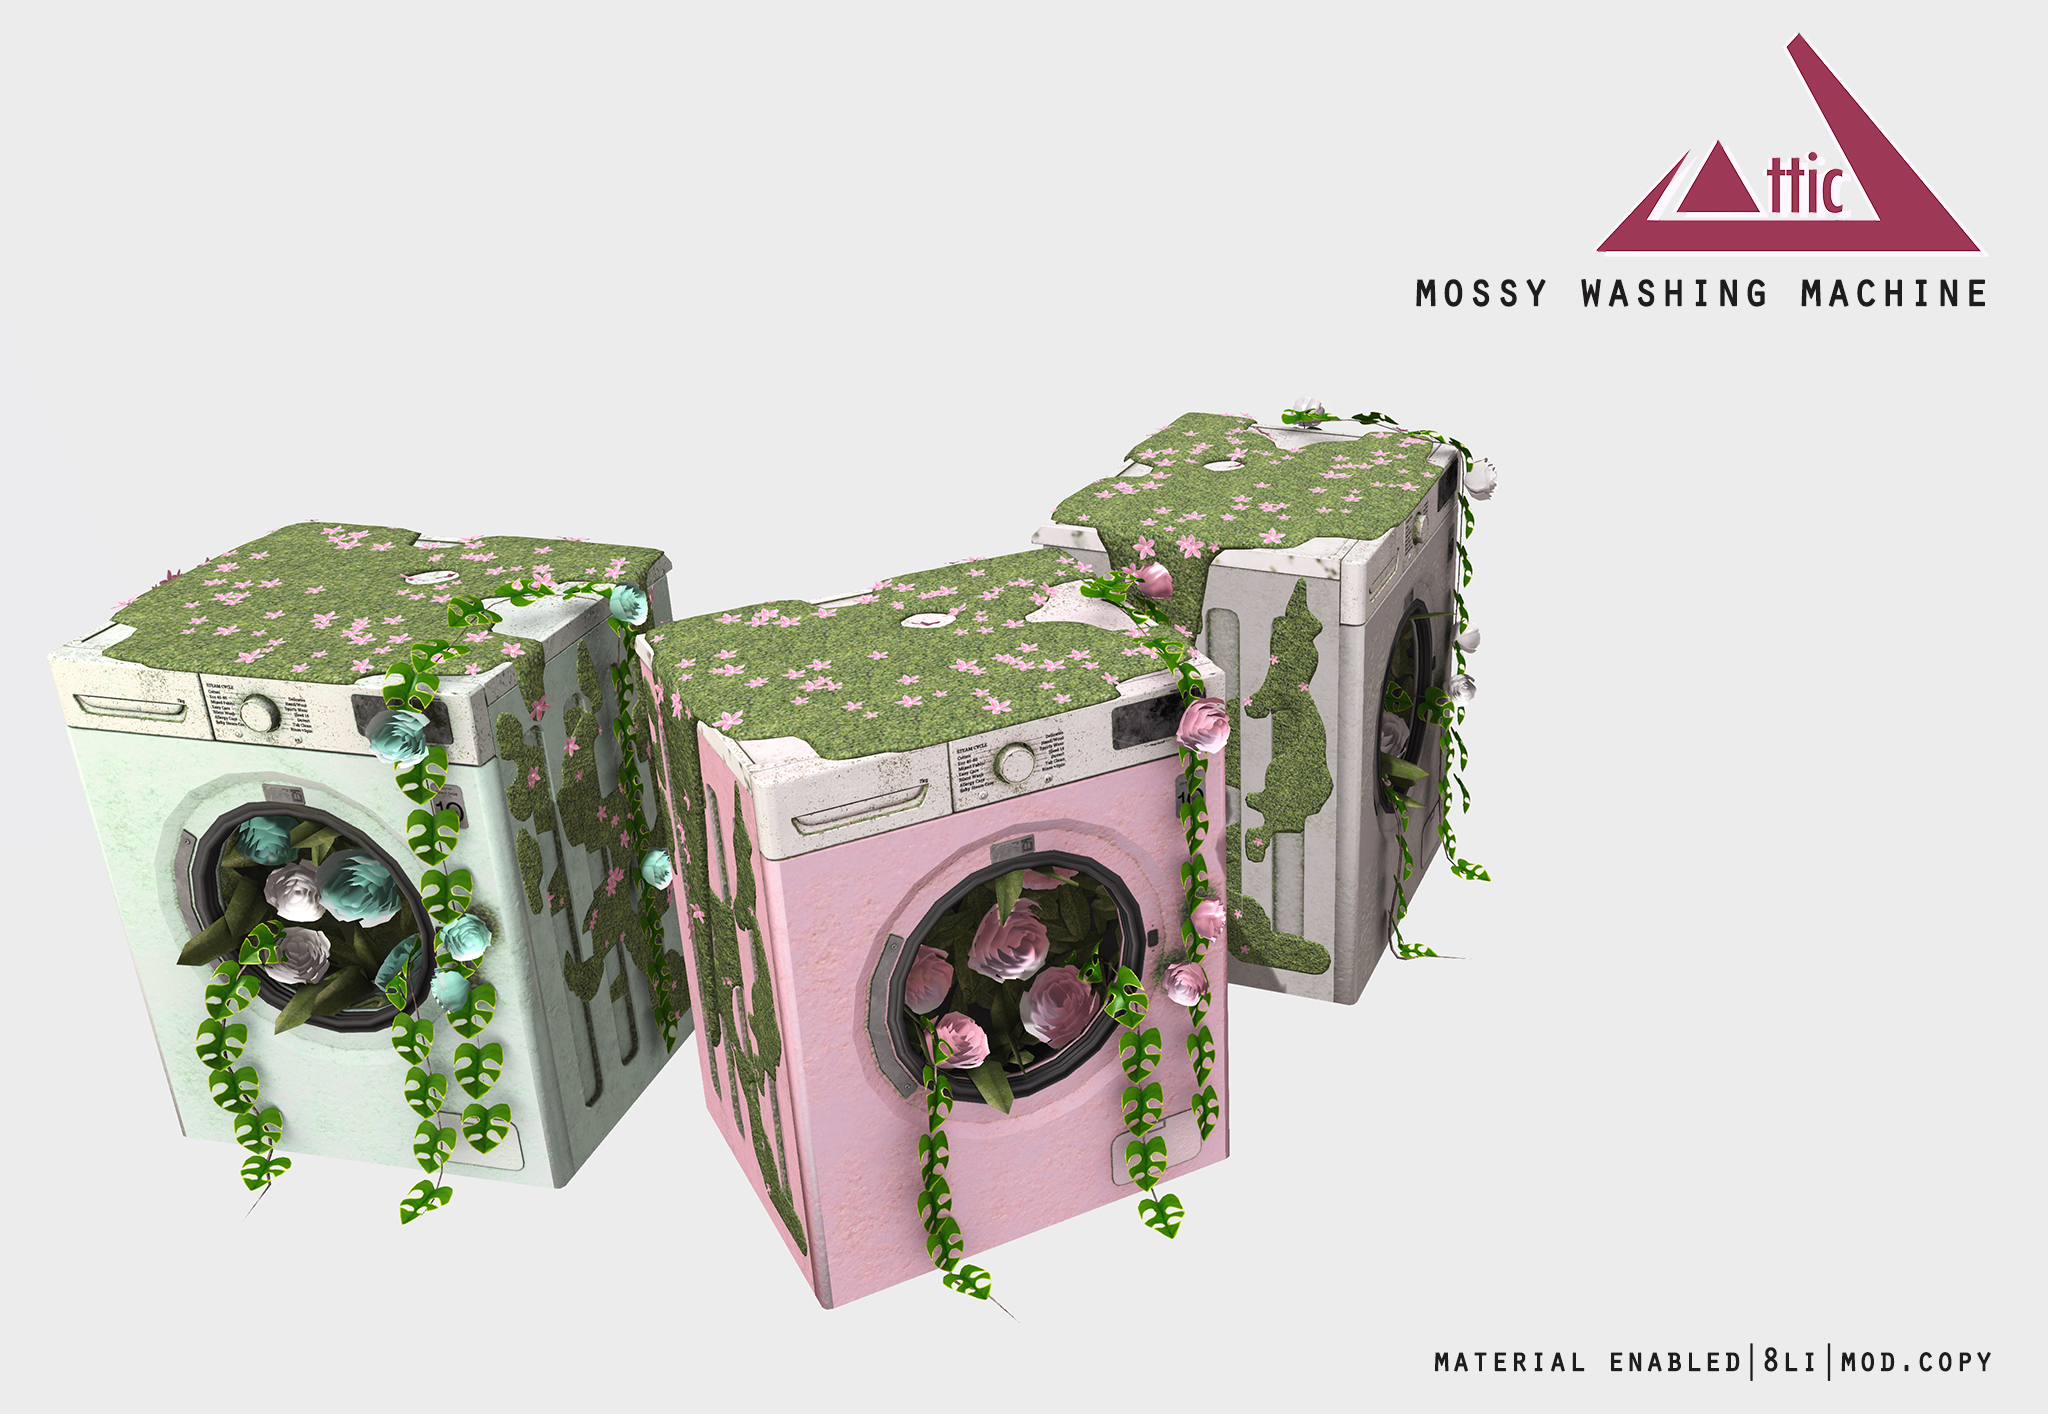 Attic – Mossy Washing Machine